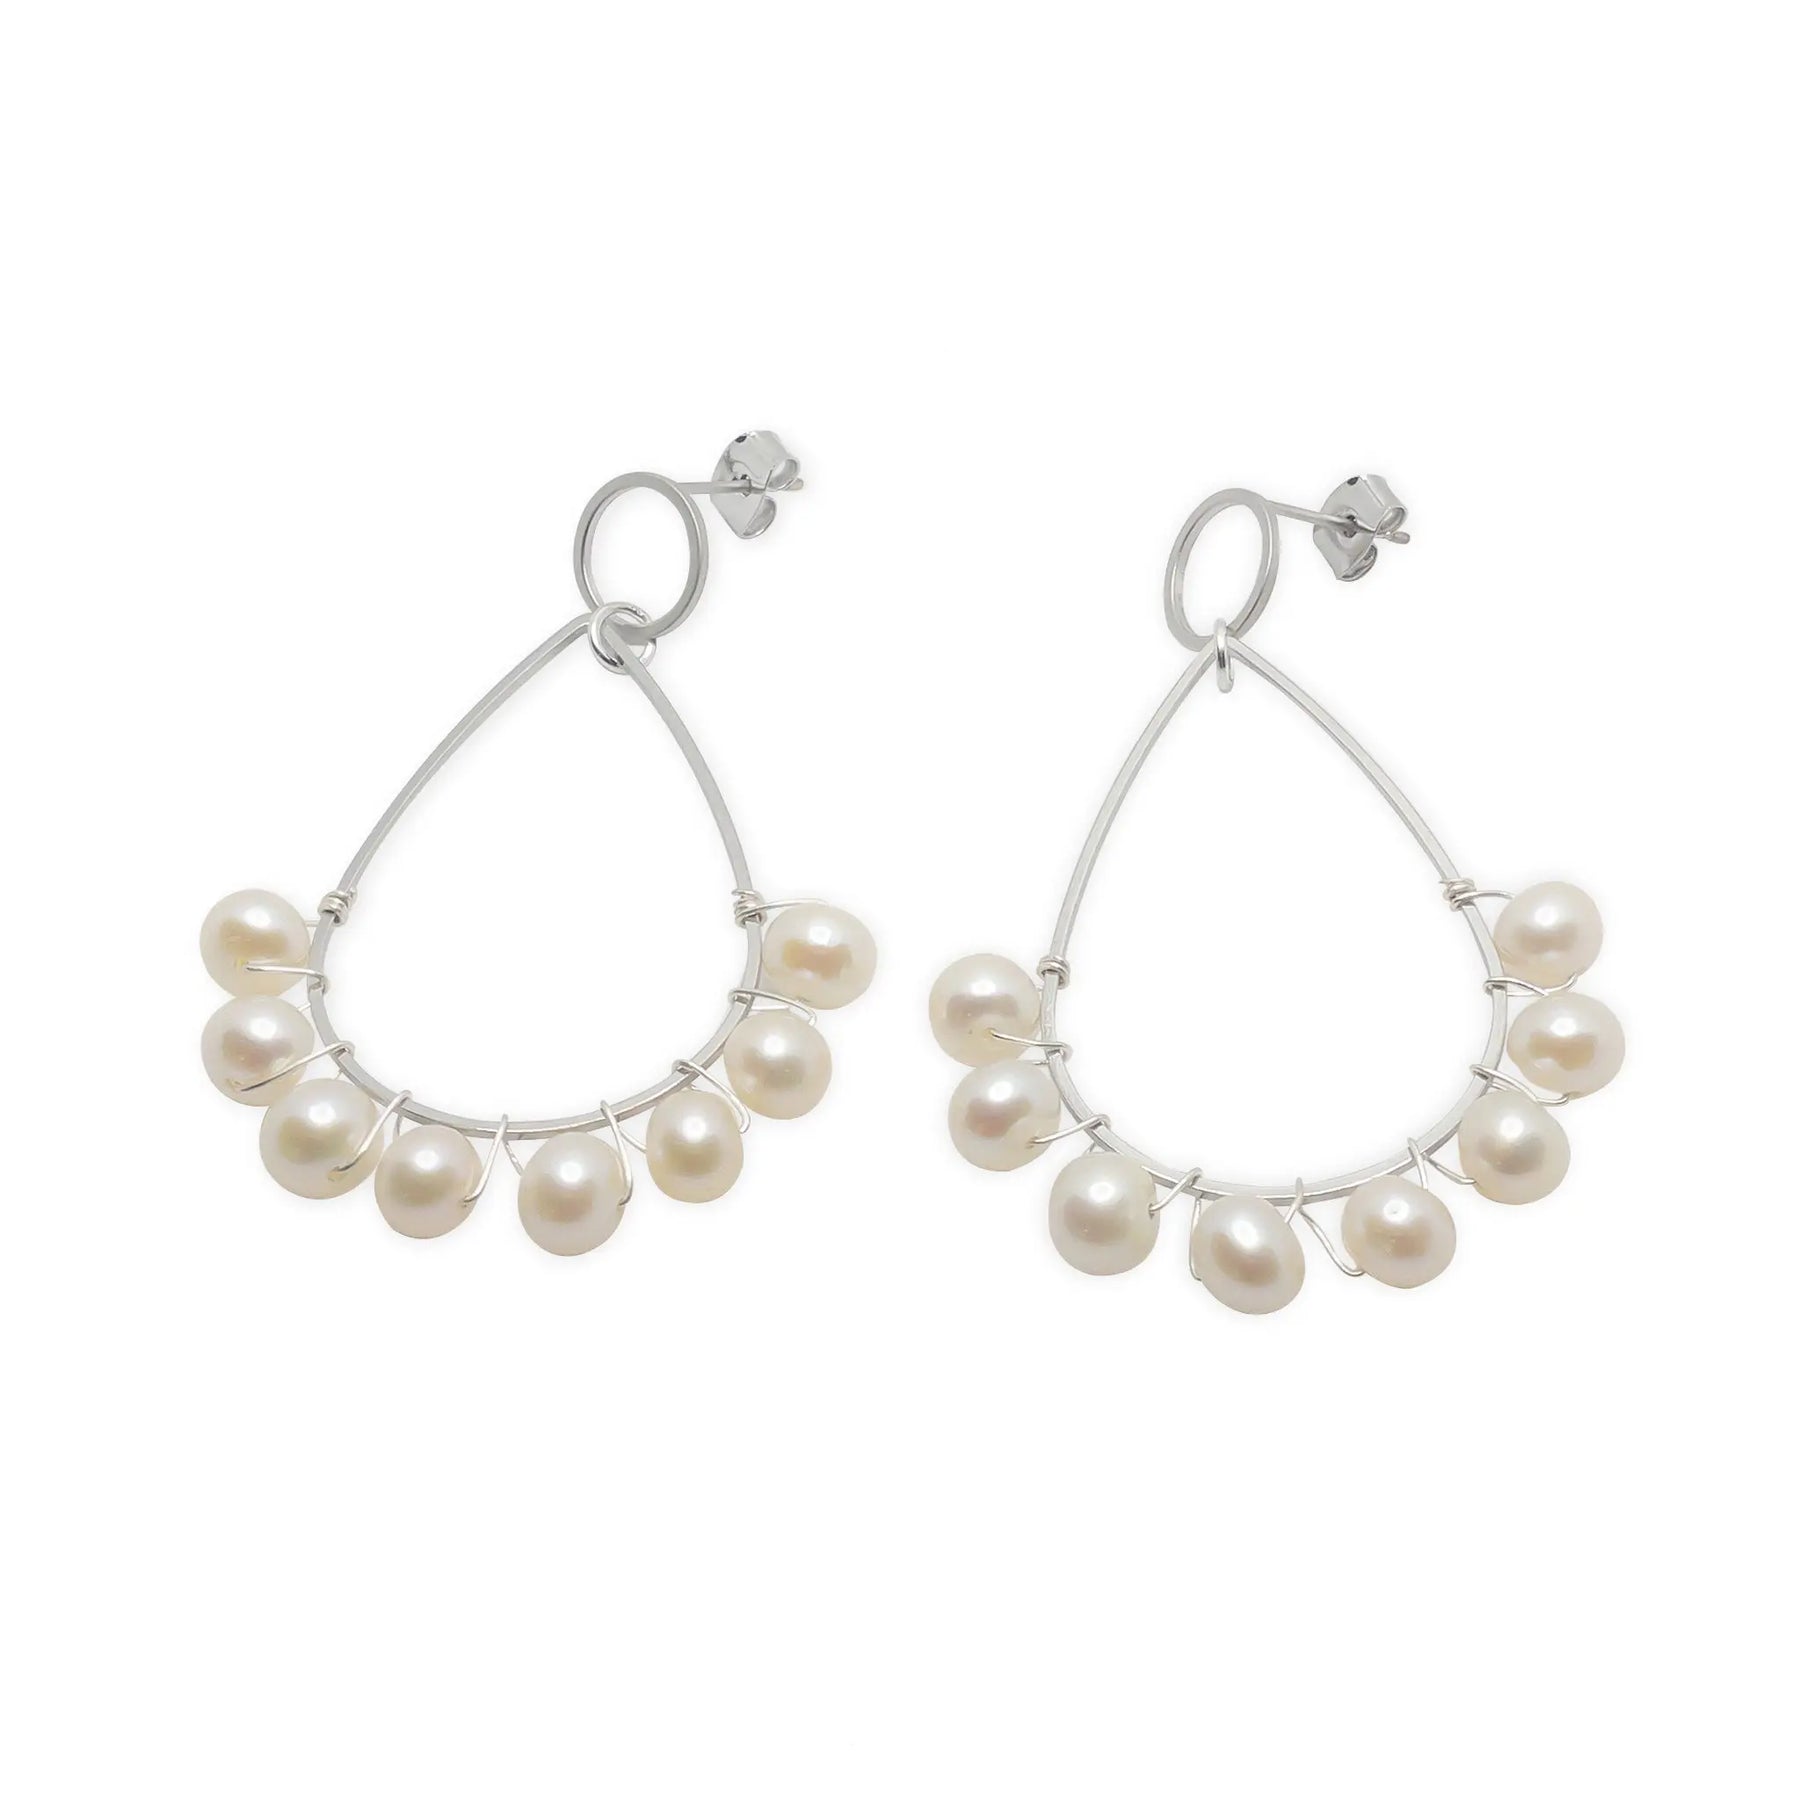 Queen pearl earrings